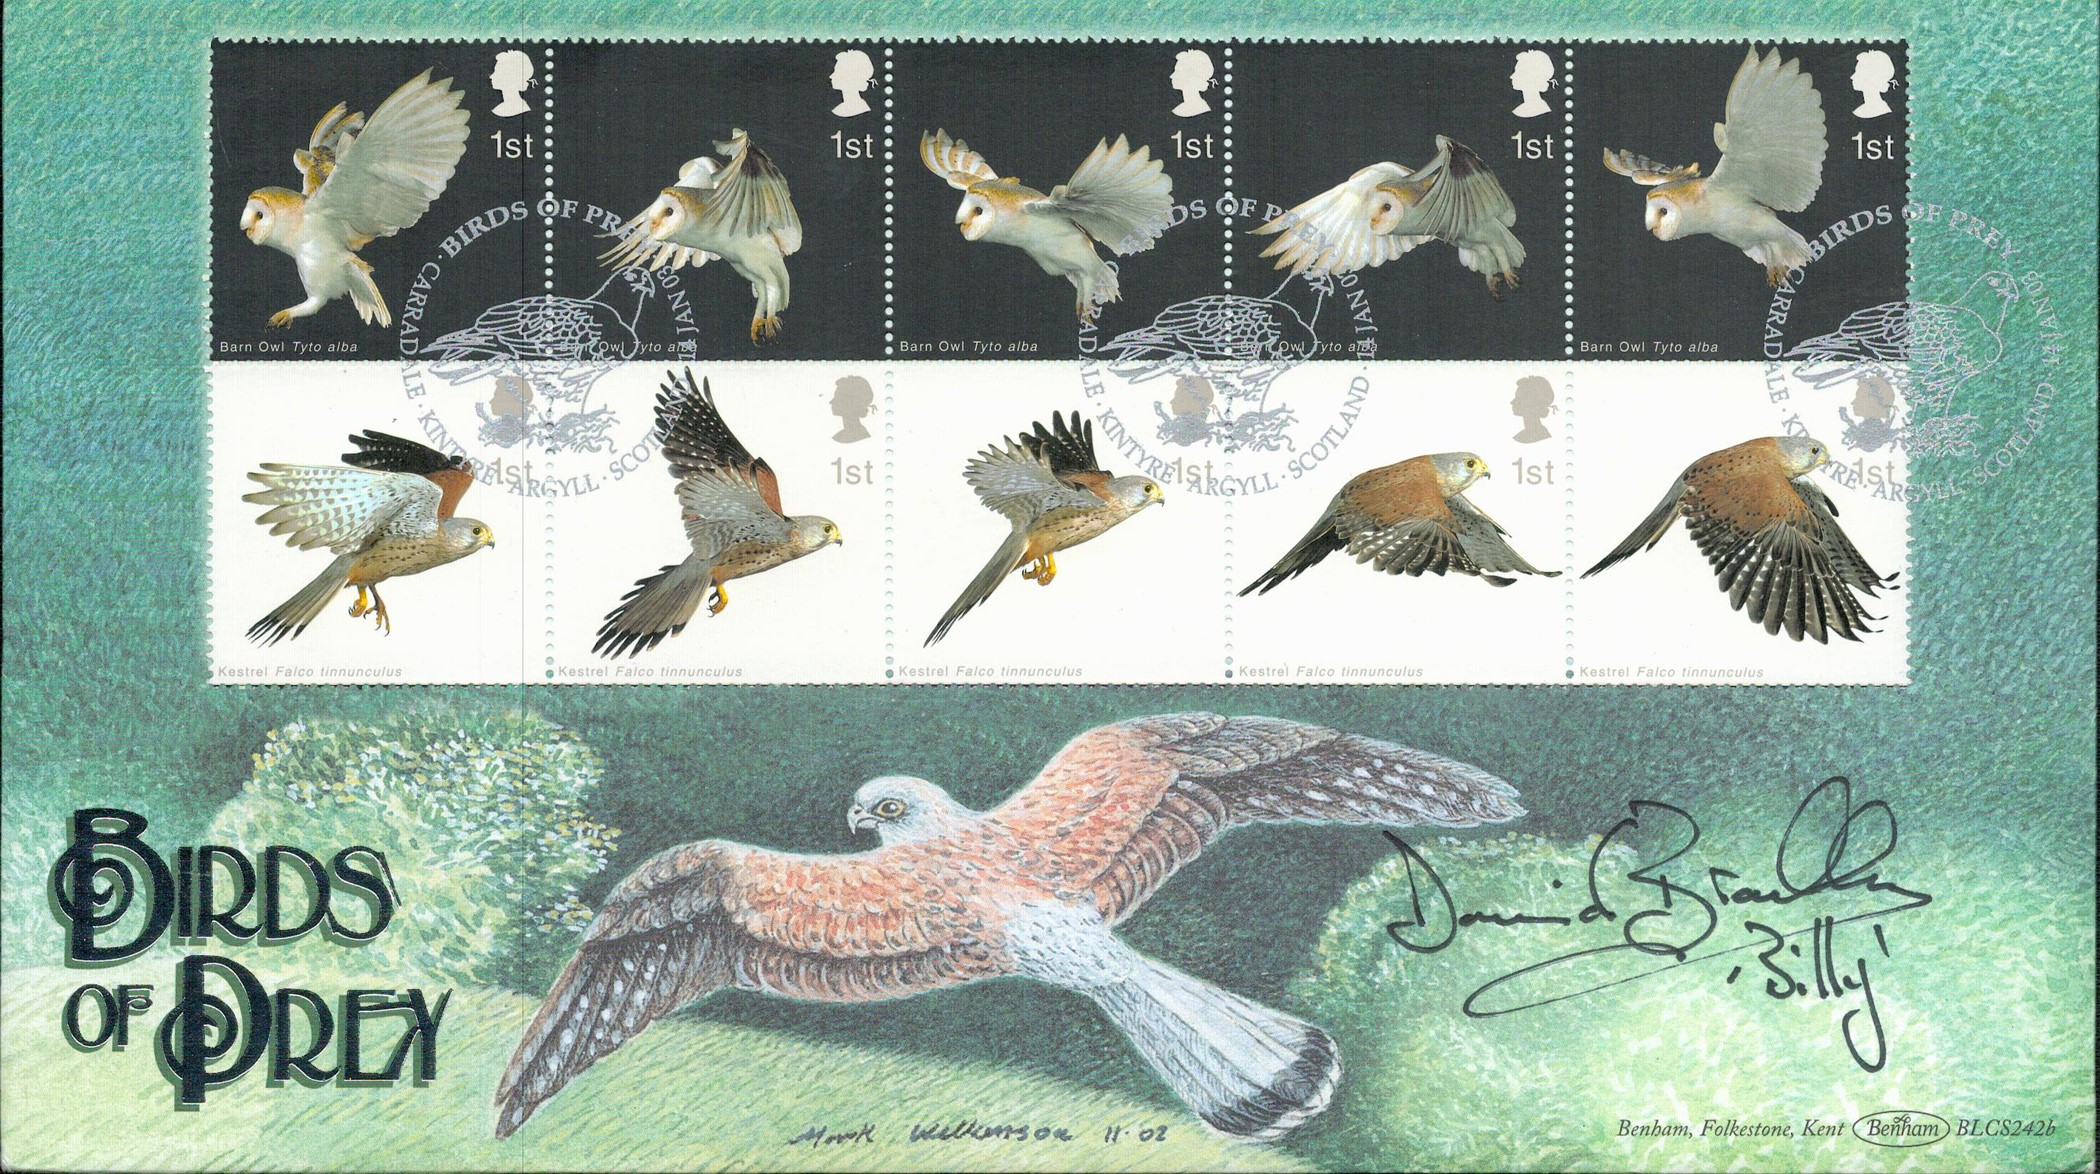 David Bradley signed Benham cover commemorating Birds Of Prey. This beautiful cover features 12